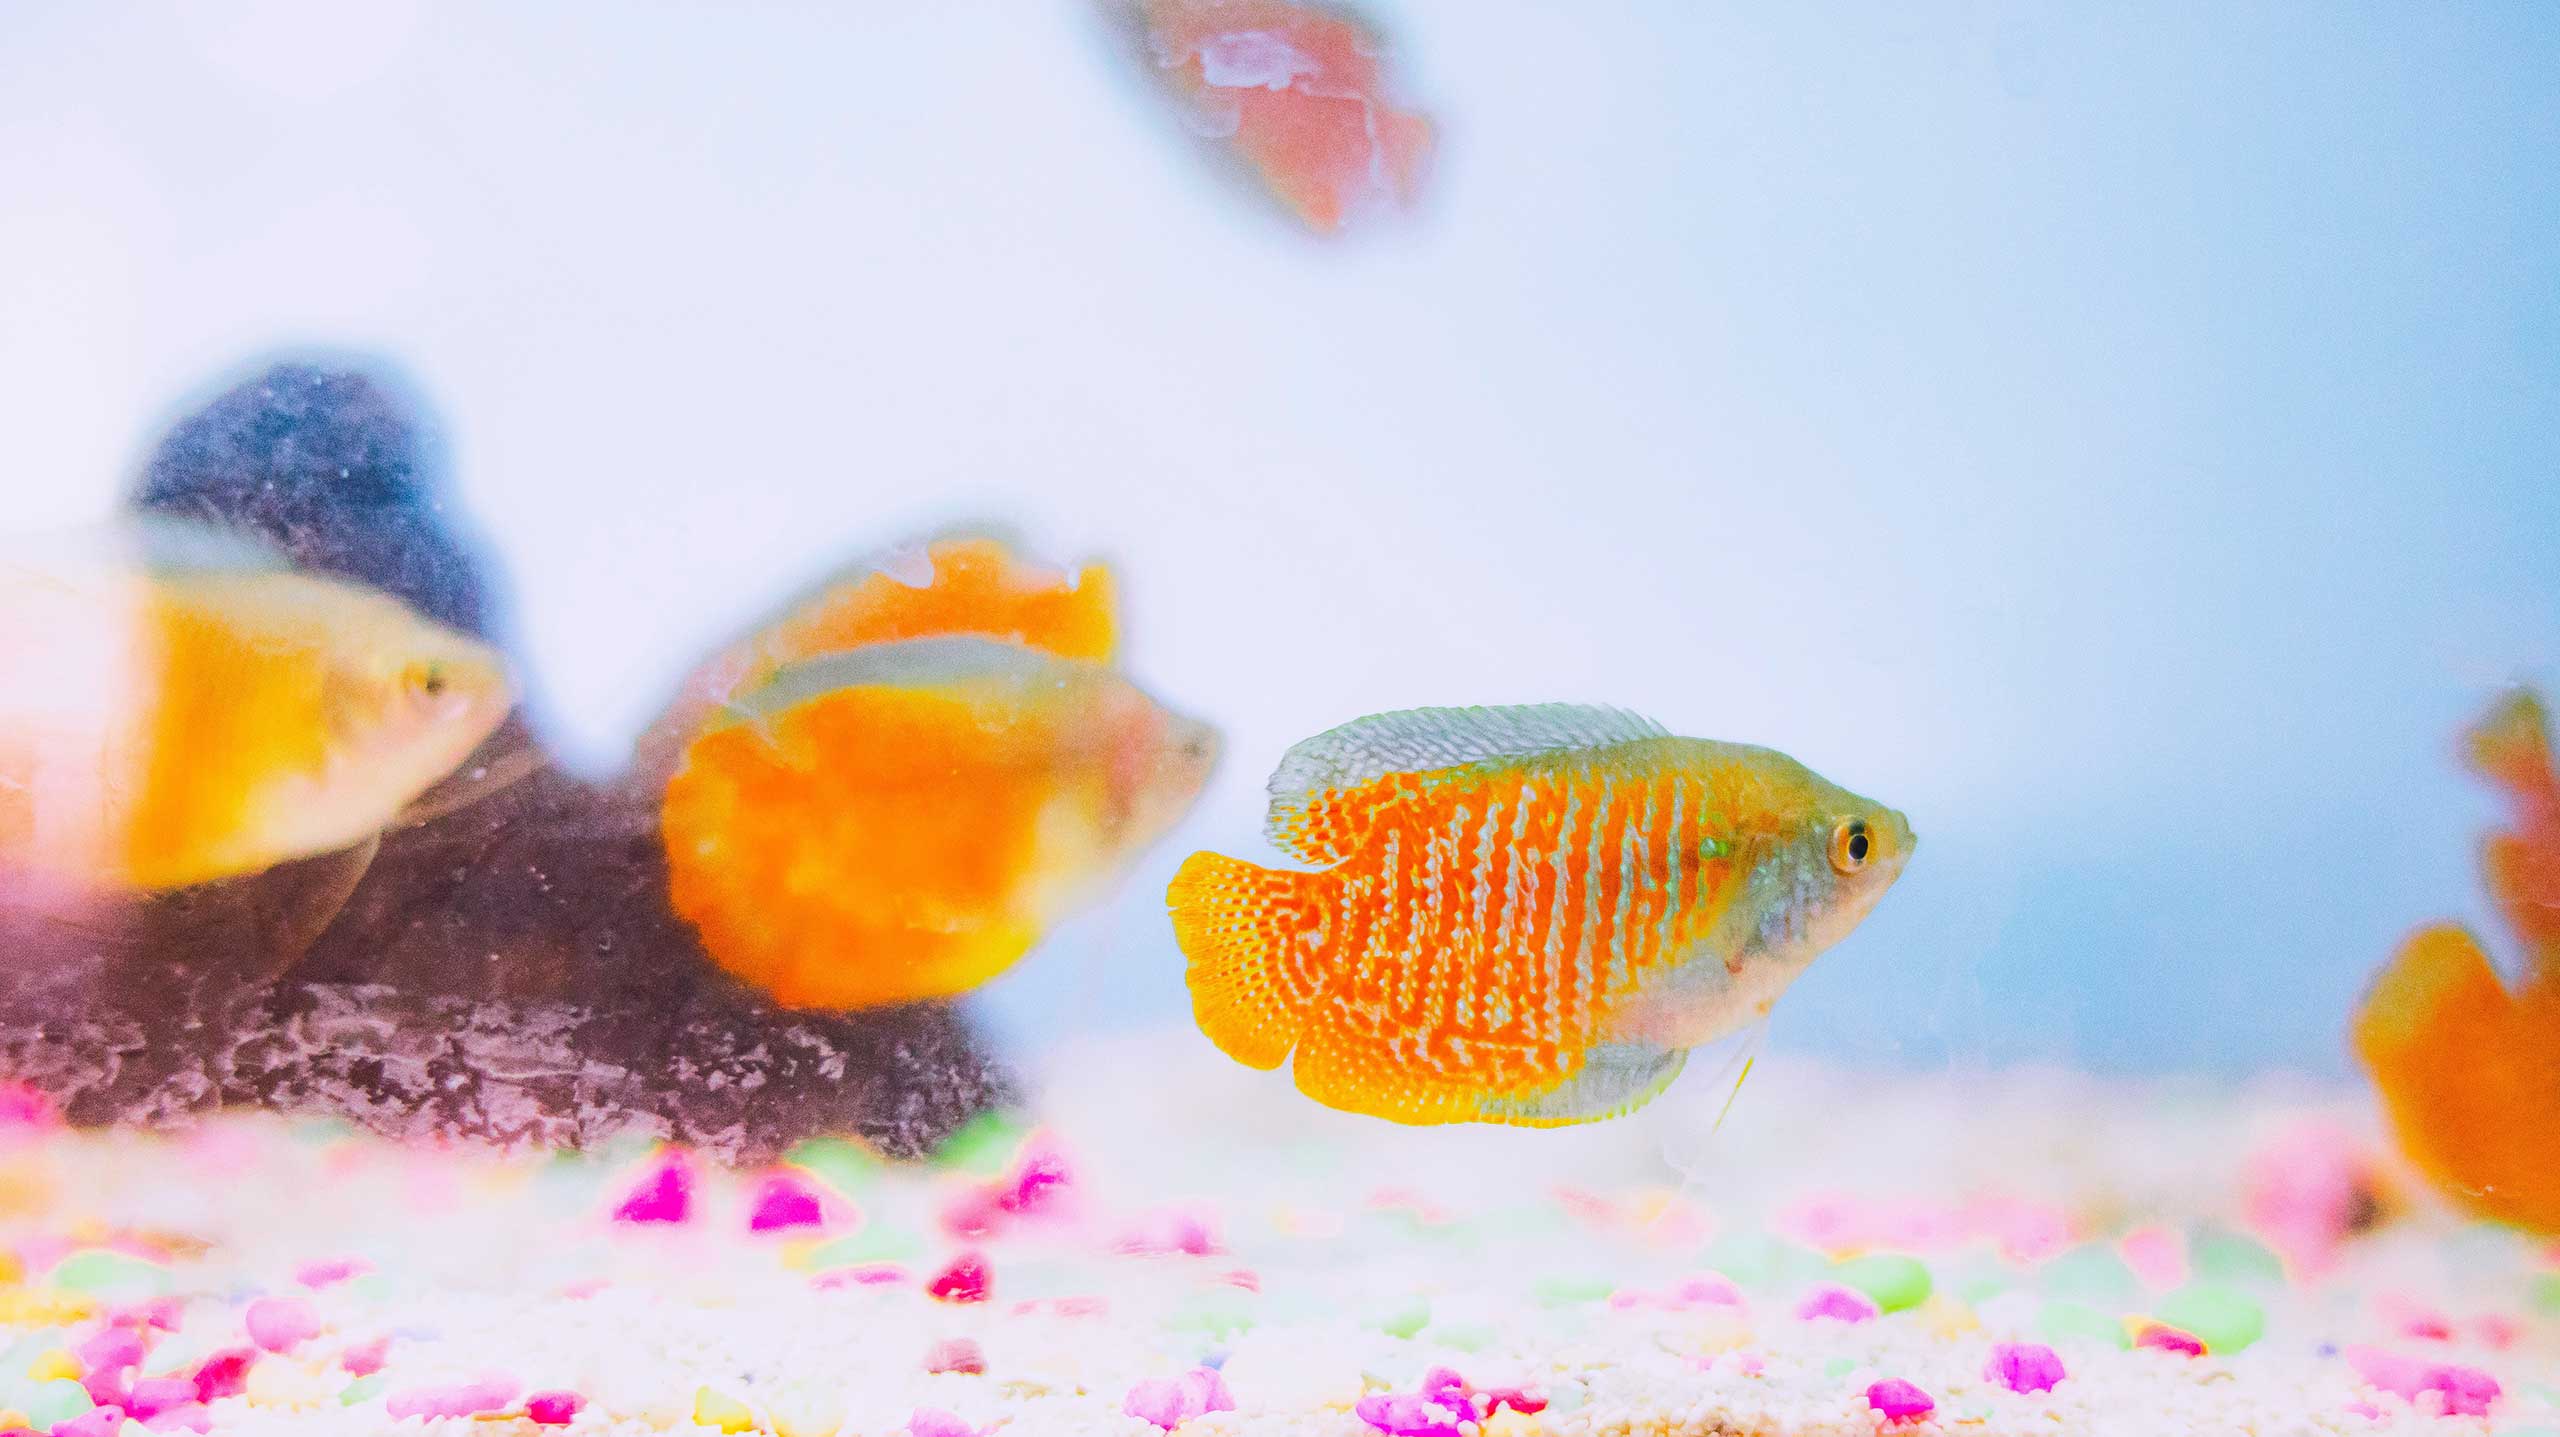 Gouramis fish in a tank